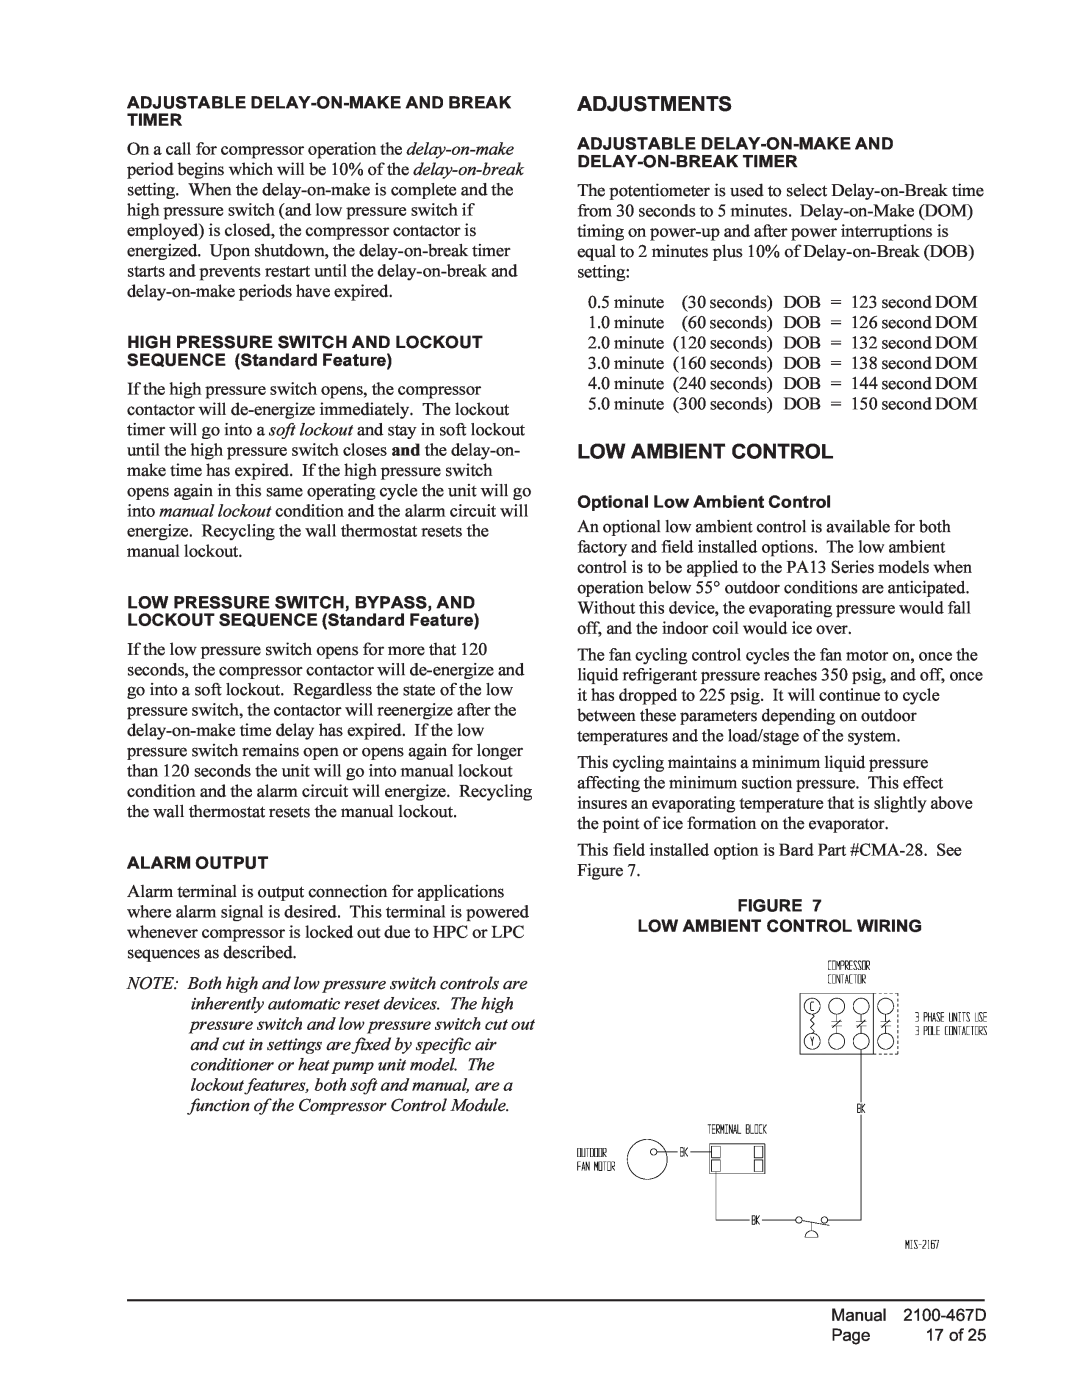 Bard PA13241-A, PA13361-A, PA13301-A, PA13361-B installation instructions Adjustments, Low Ambient Control 